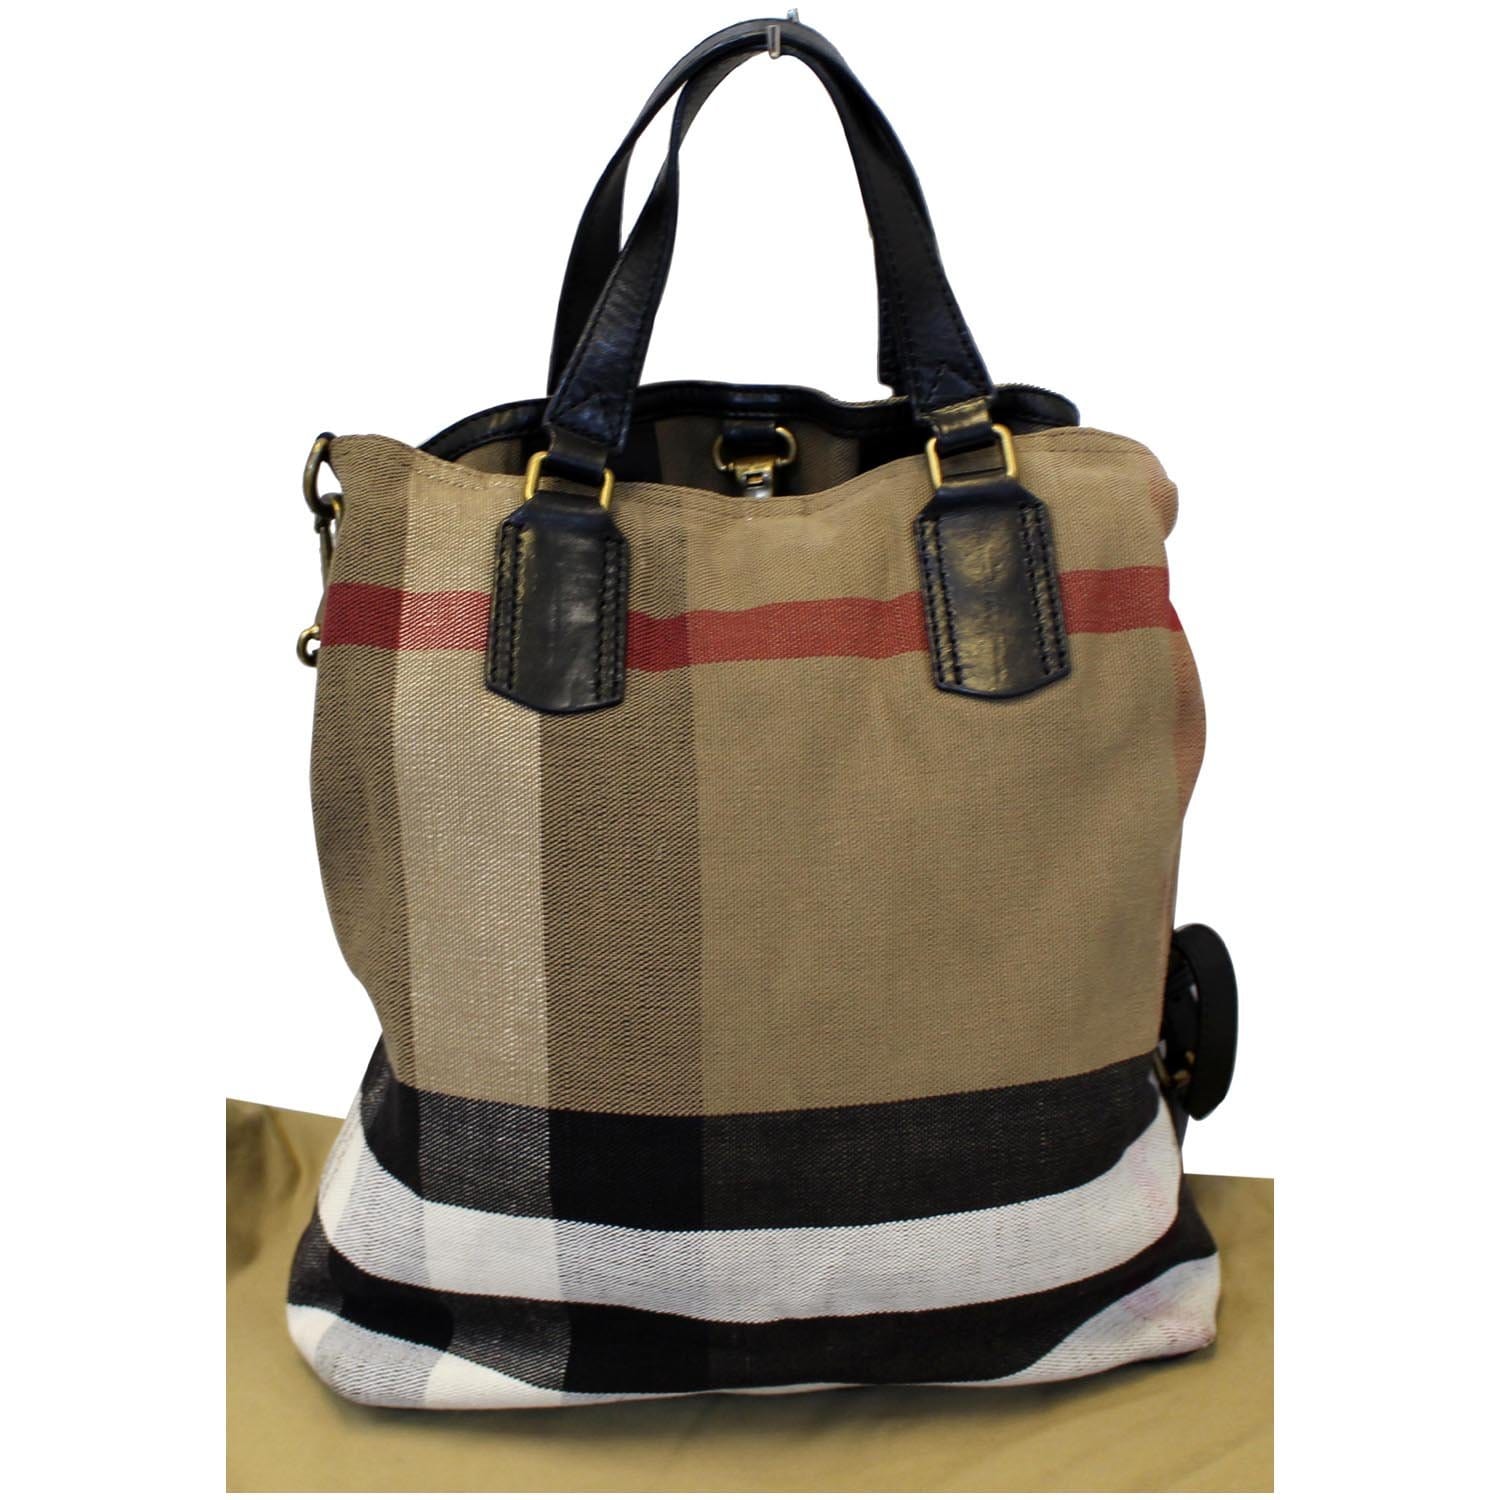 Burberry Canvas Medium Check Bucket Bag